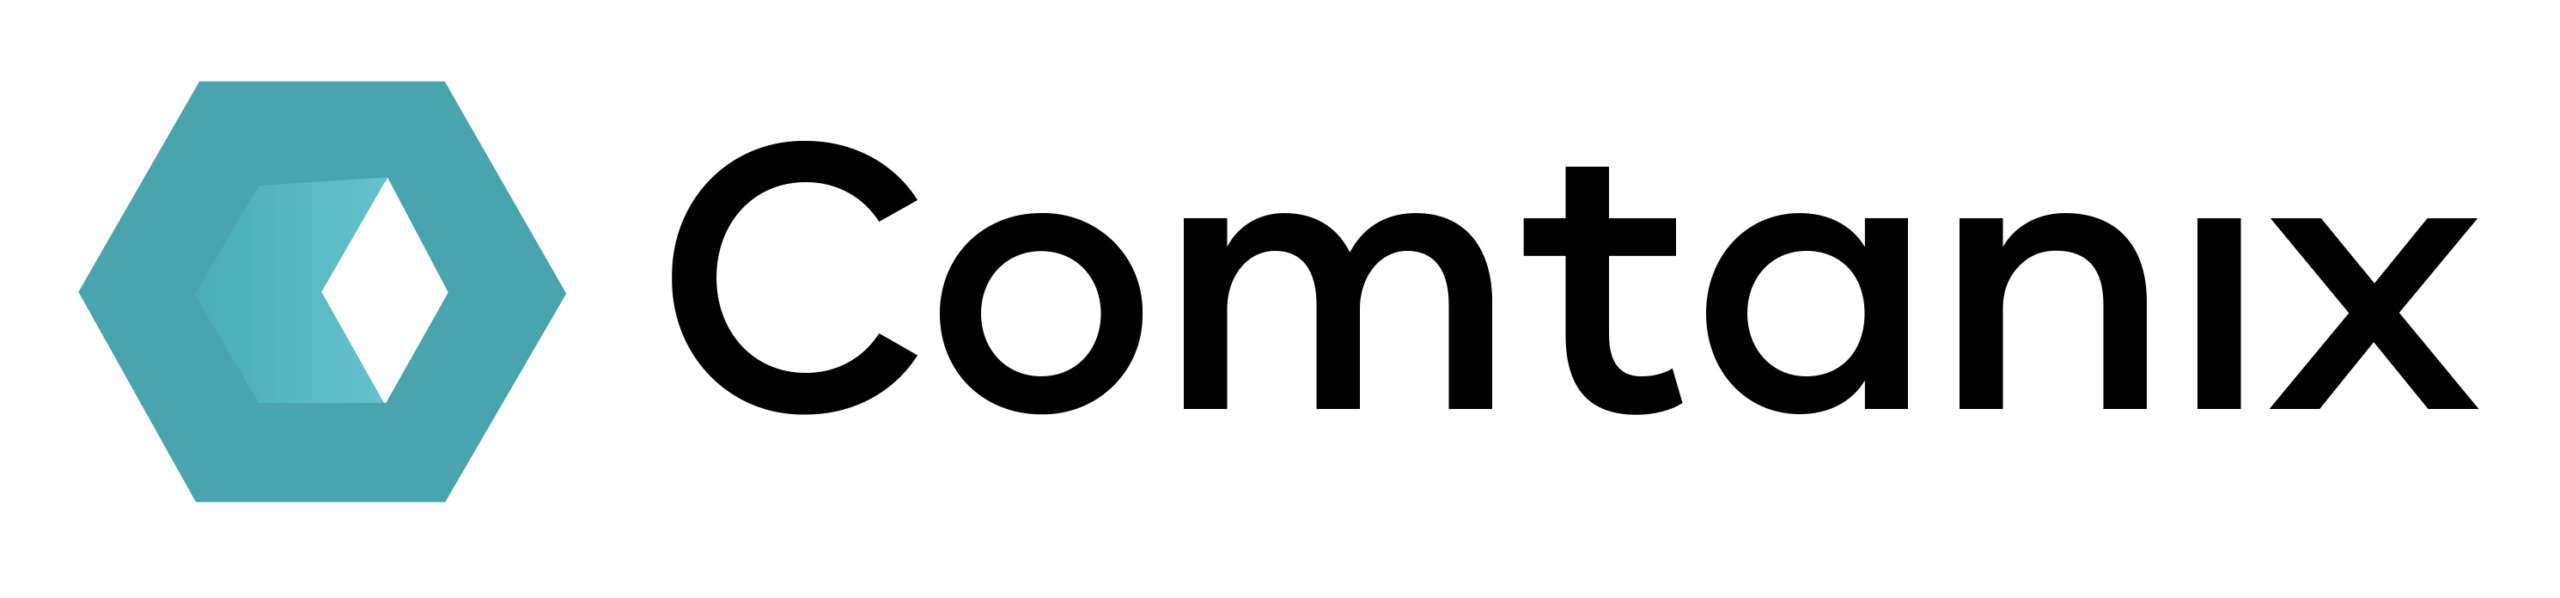 comtanix-logo